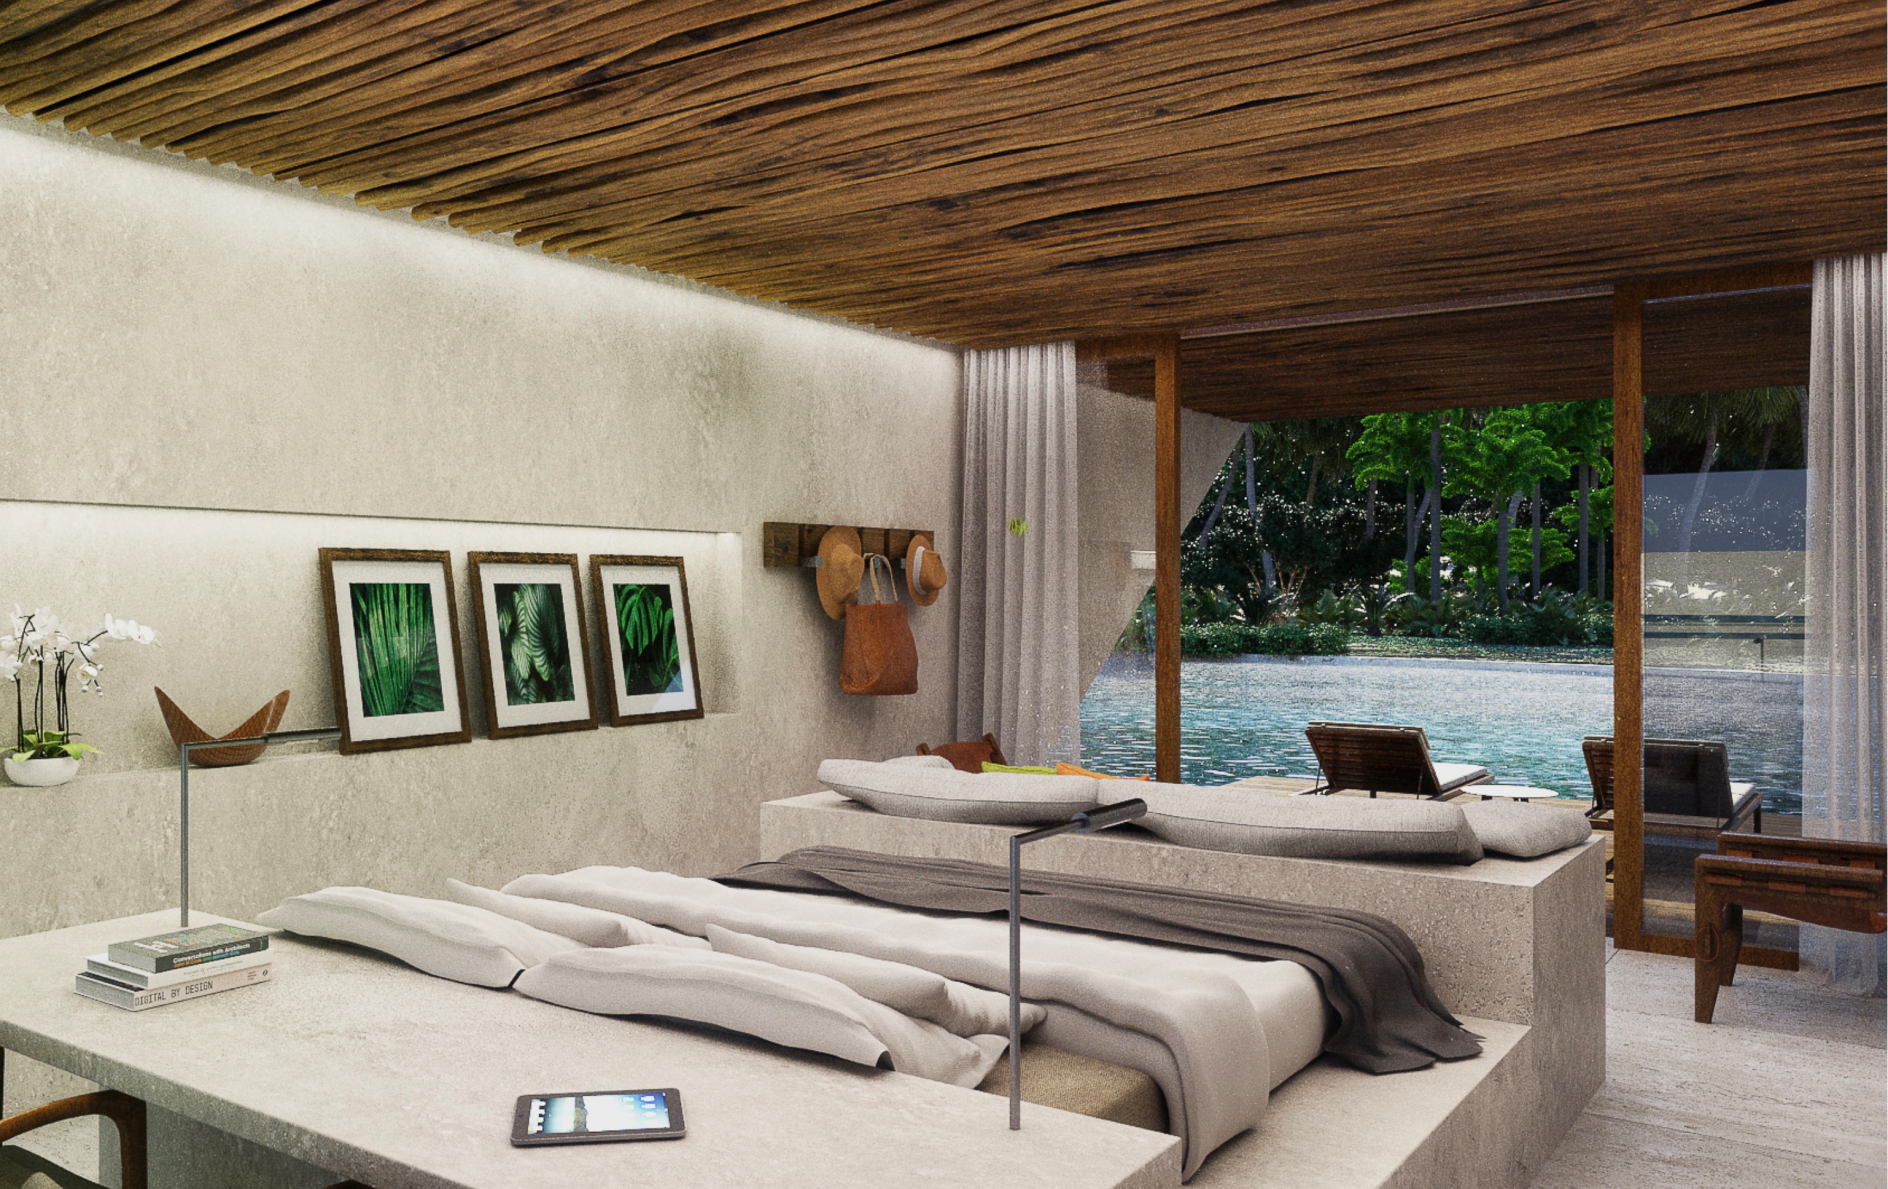 Pool Villa Bedroom at Anantara Prea Ceara Resort in Brazil. Click to enlarge.